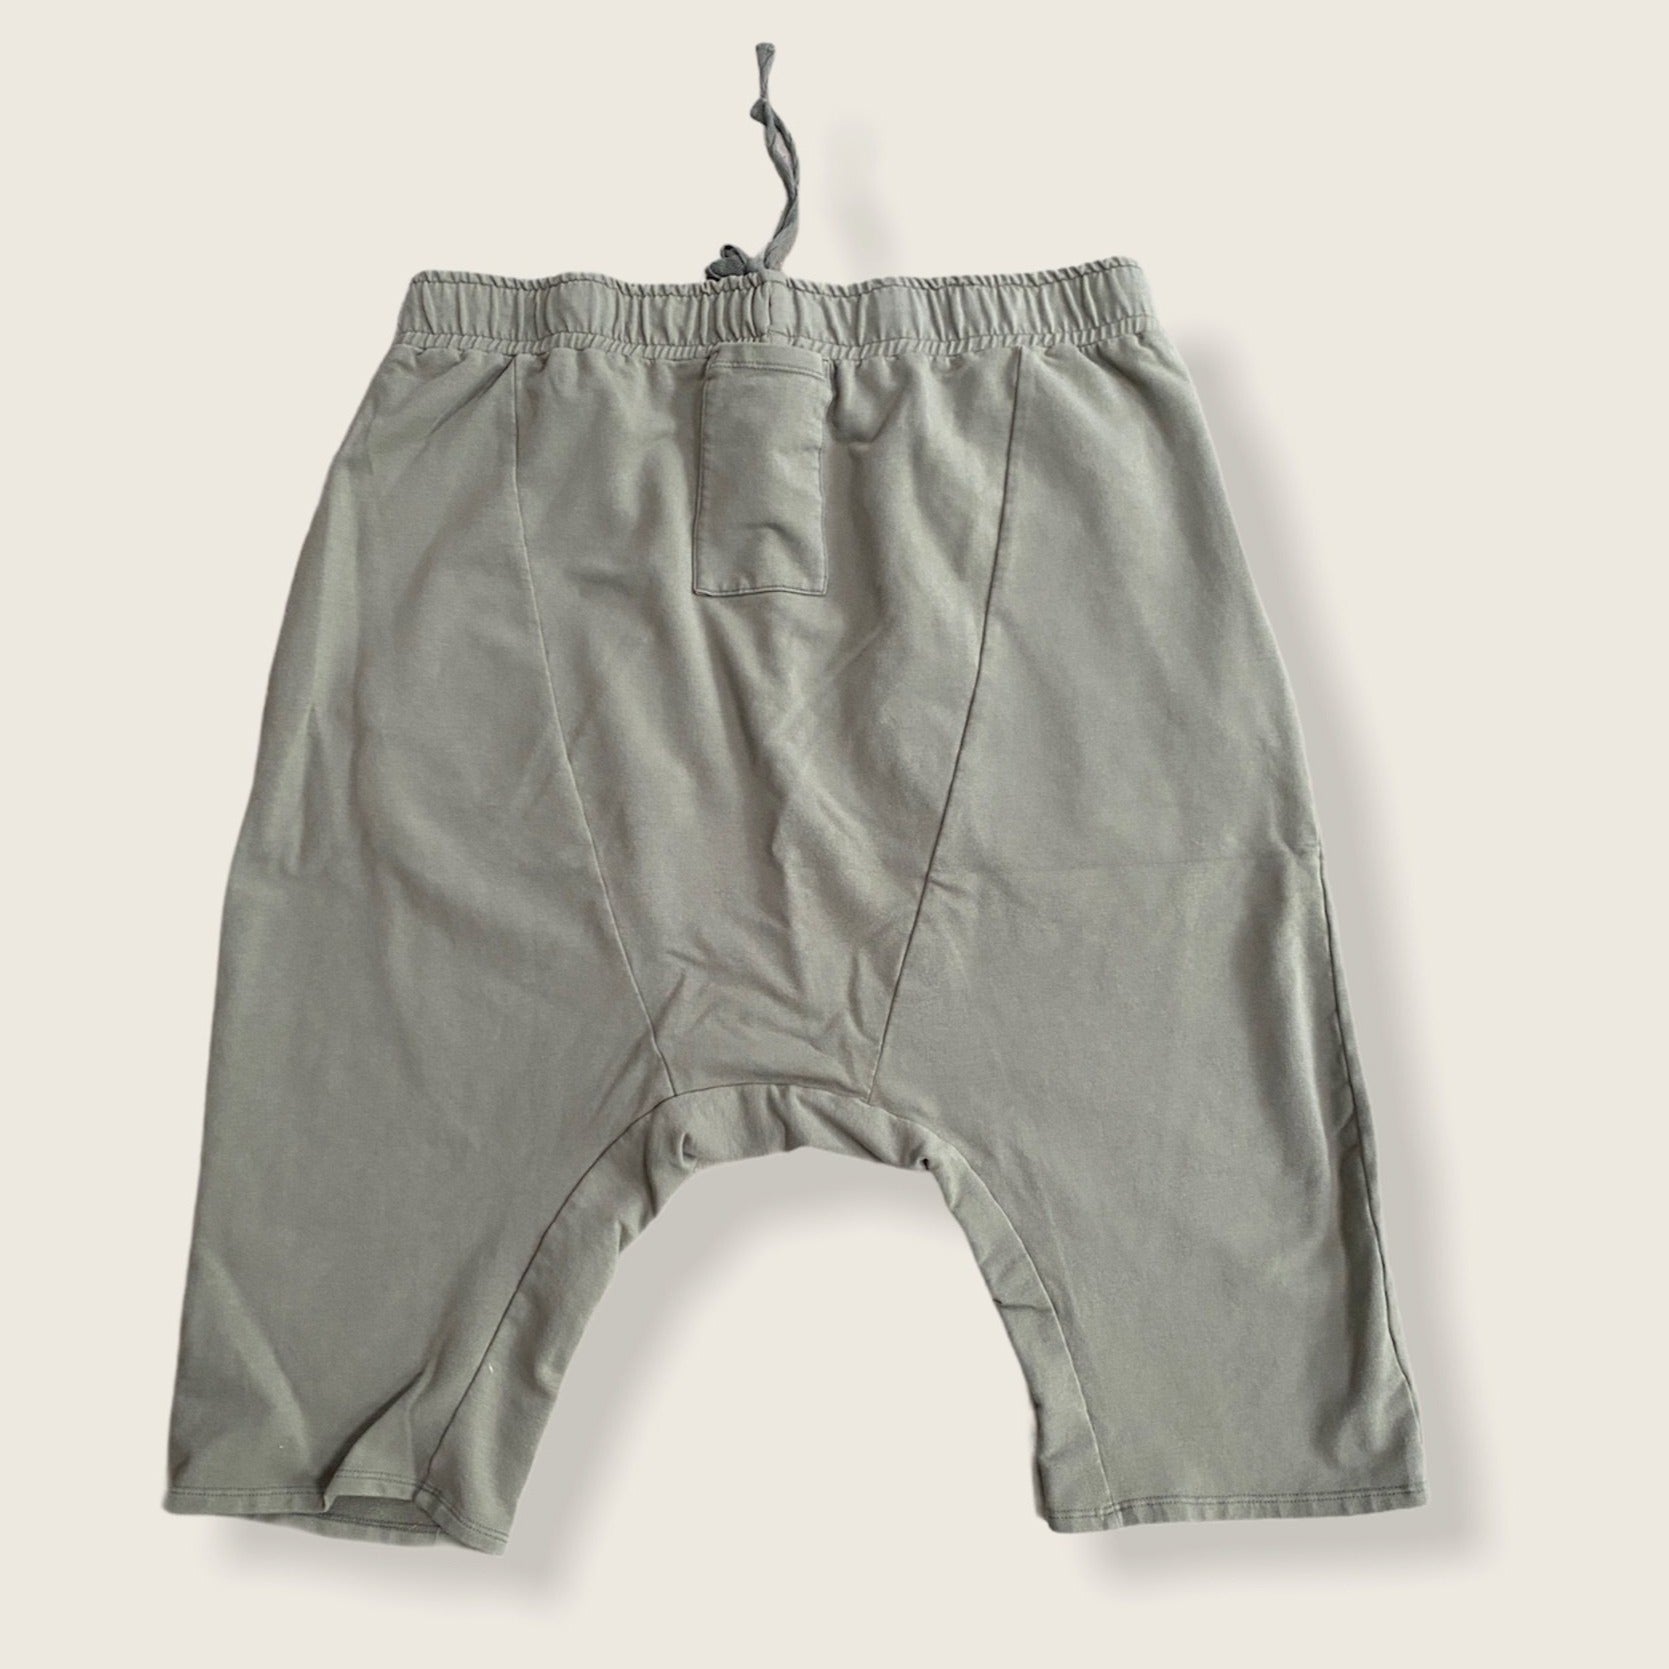 Drop Crotch Shorts- Army Green